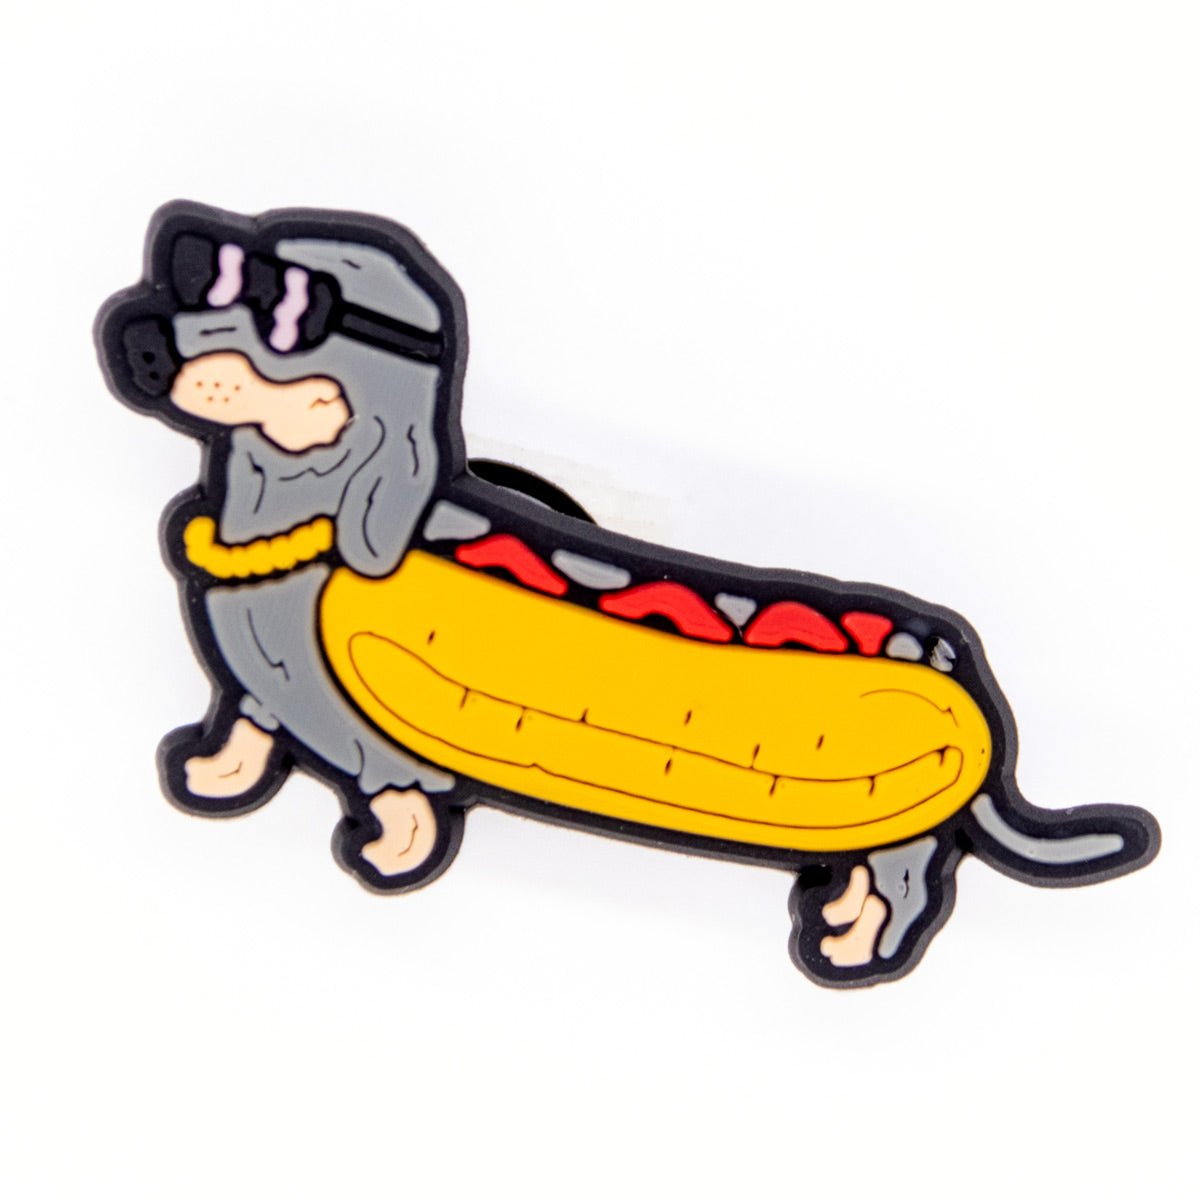 hot dog shoe charm - bean goods